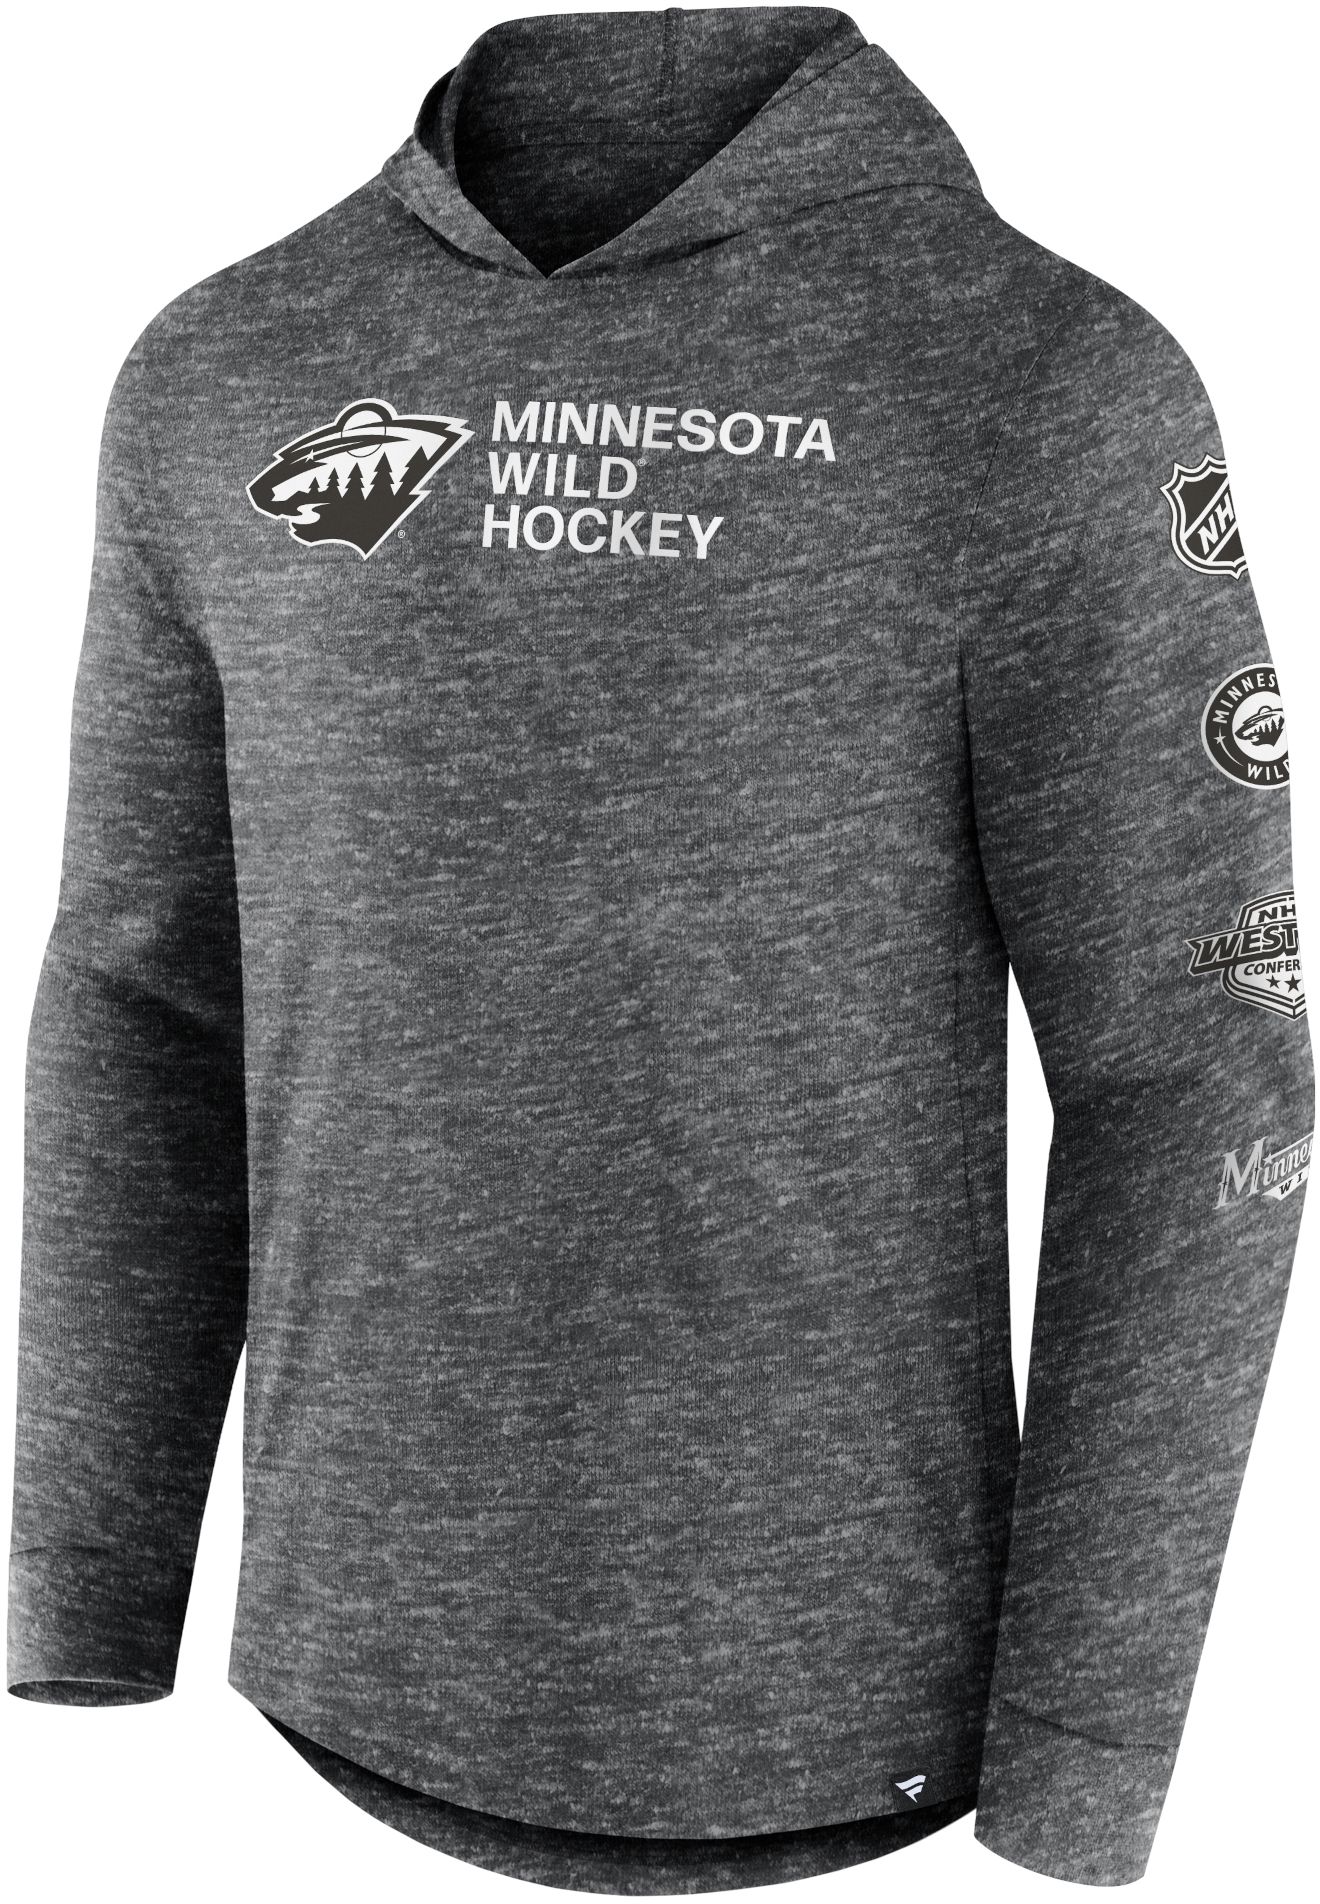 minnesota wild hockey sweatshirt